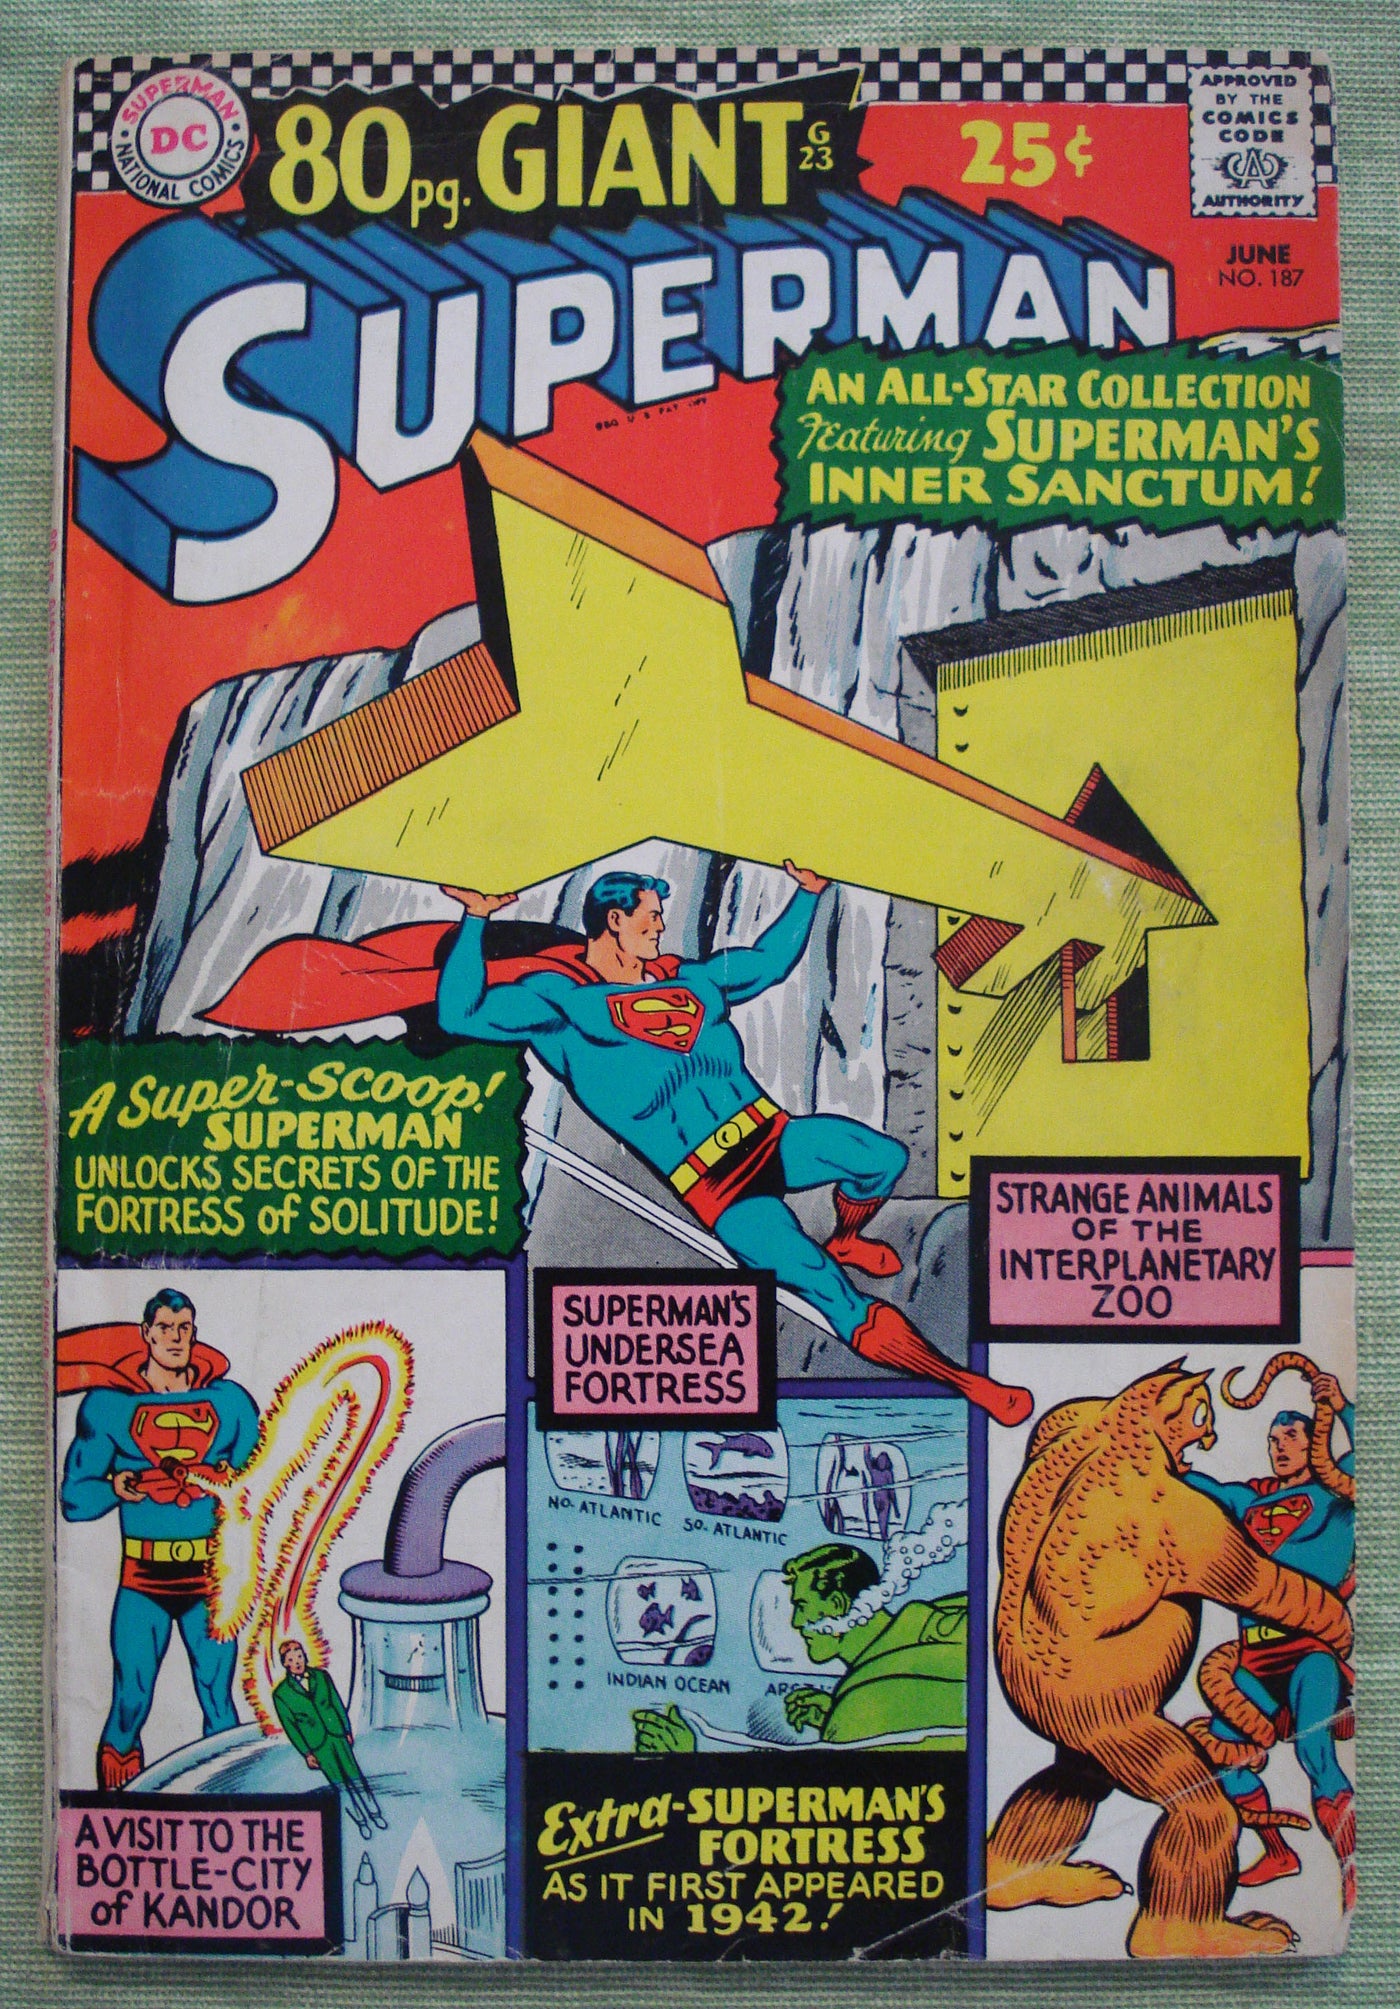 80 Pg Giant Superman #187 DC Comics June 1966